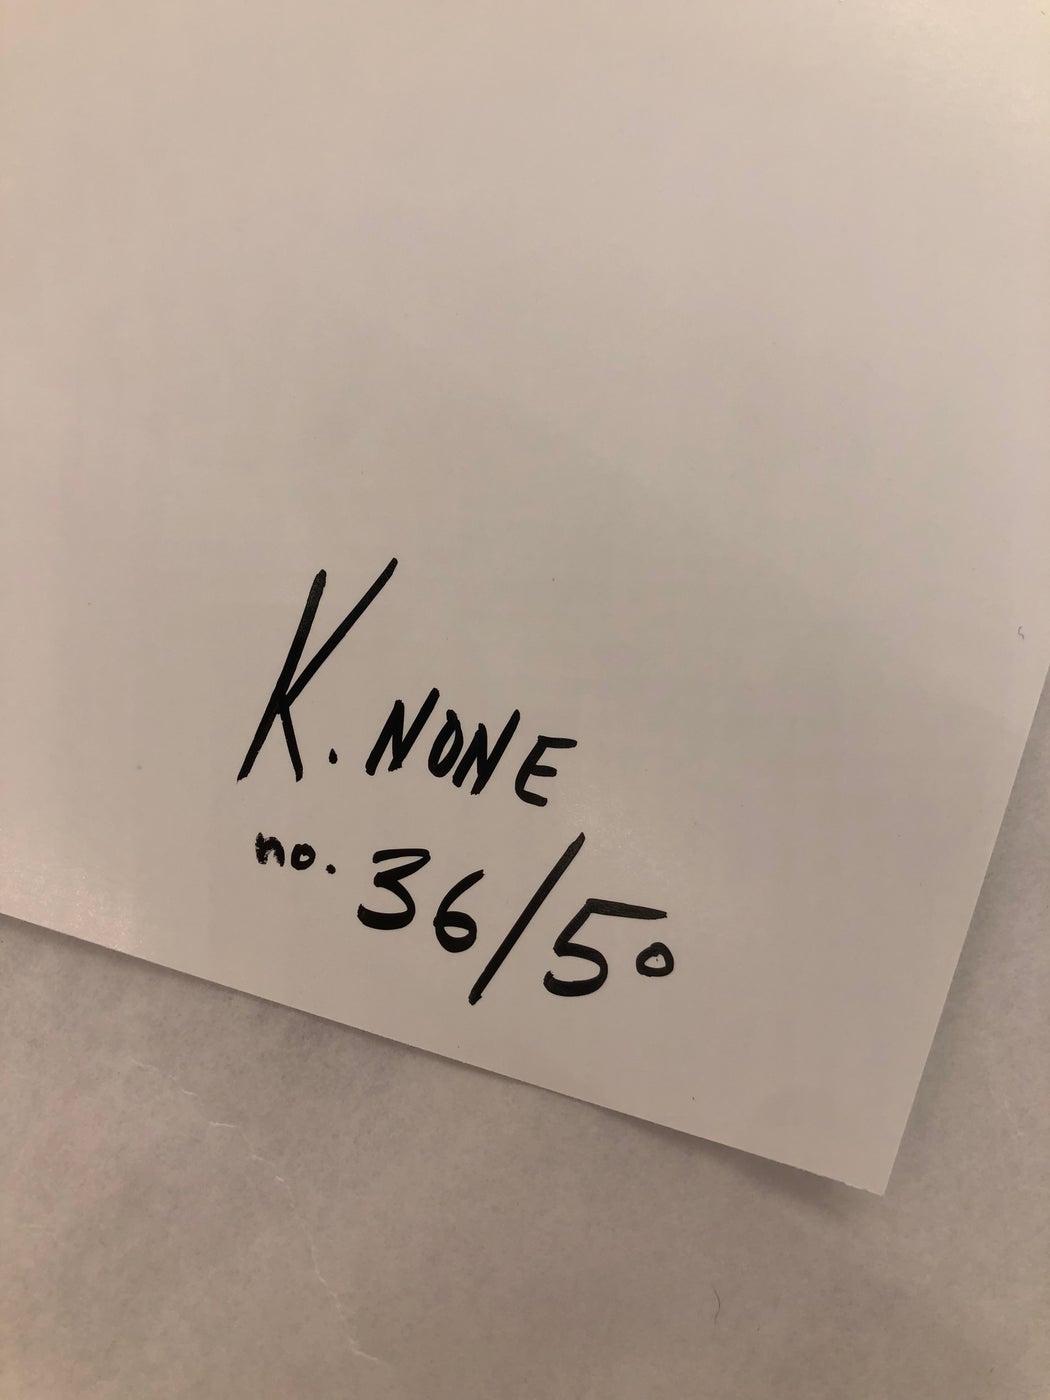 Kevin None "Waning" Print (2020)